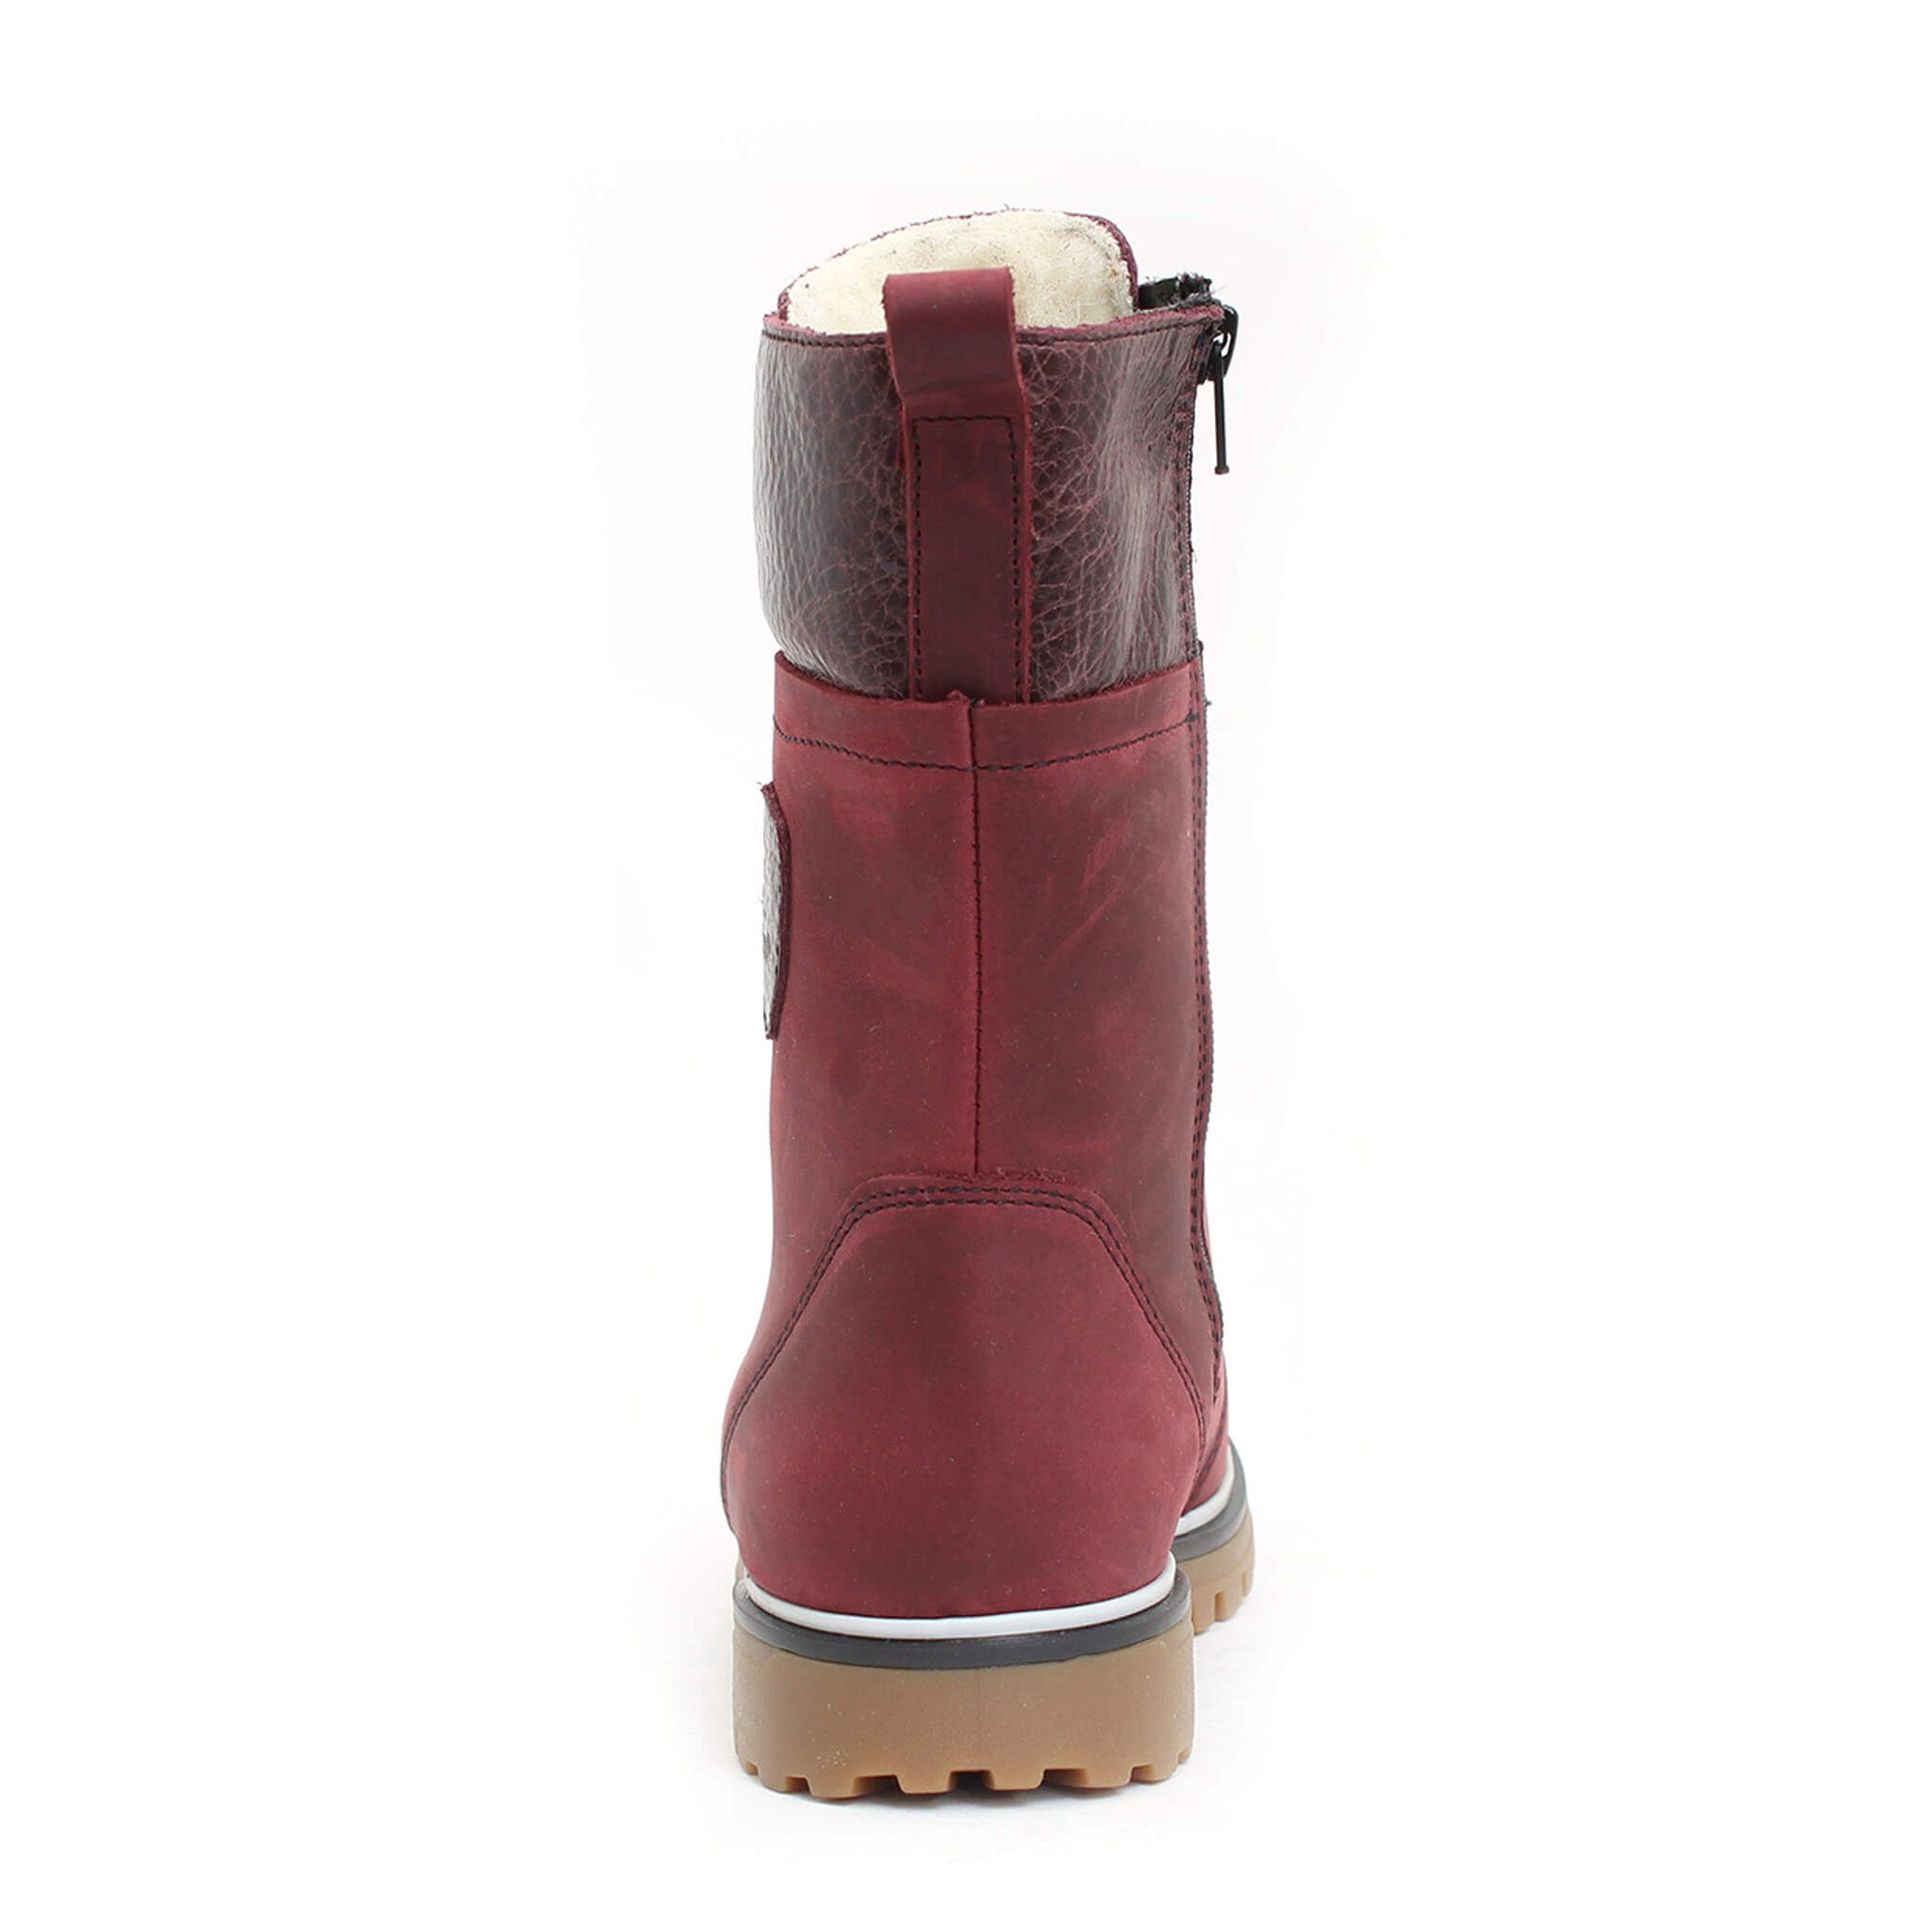 Shanna winter boot for women 